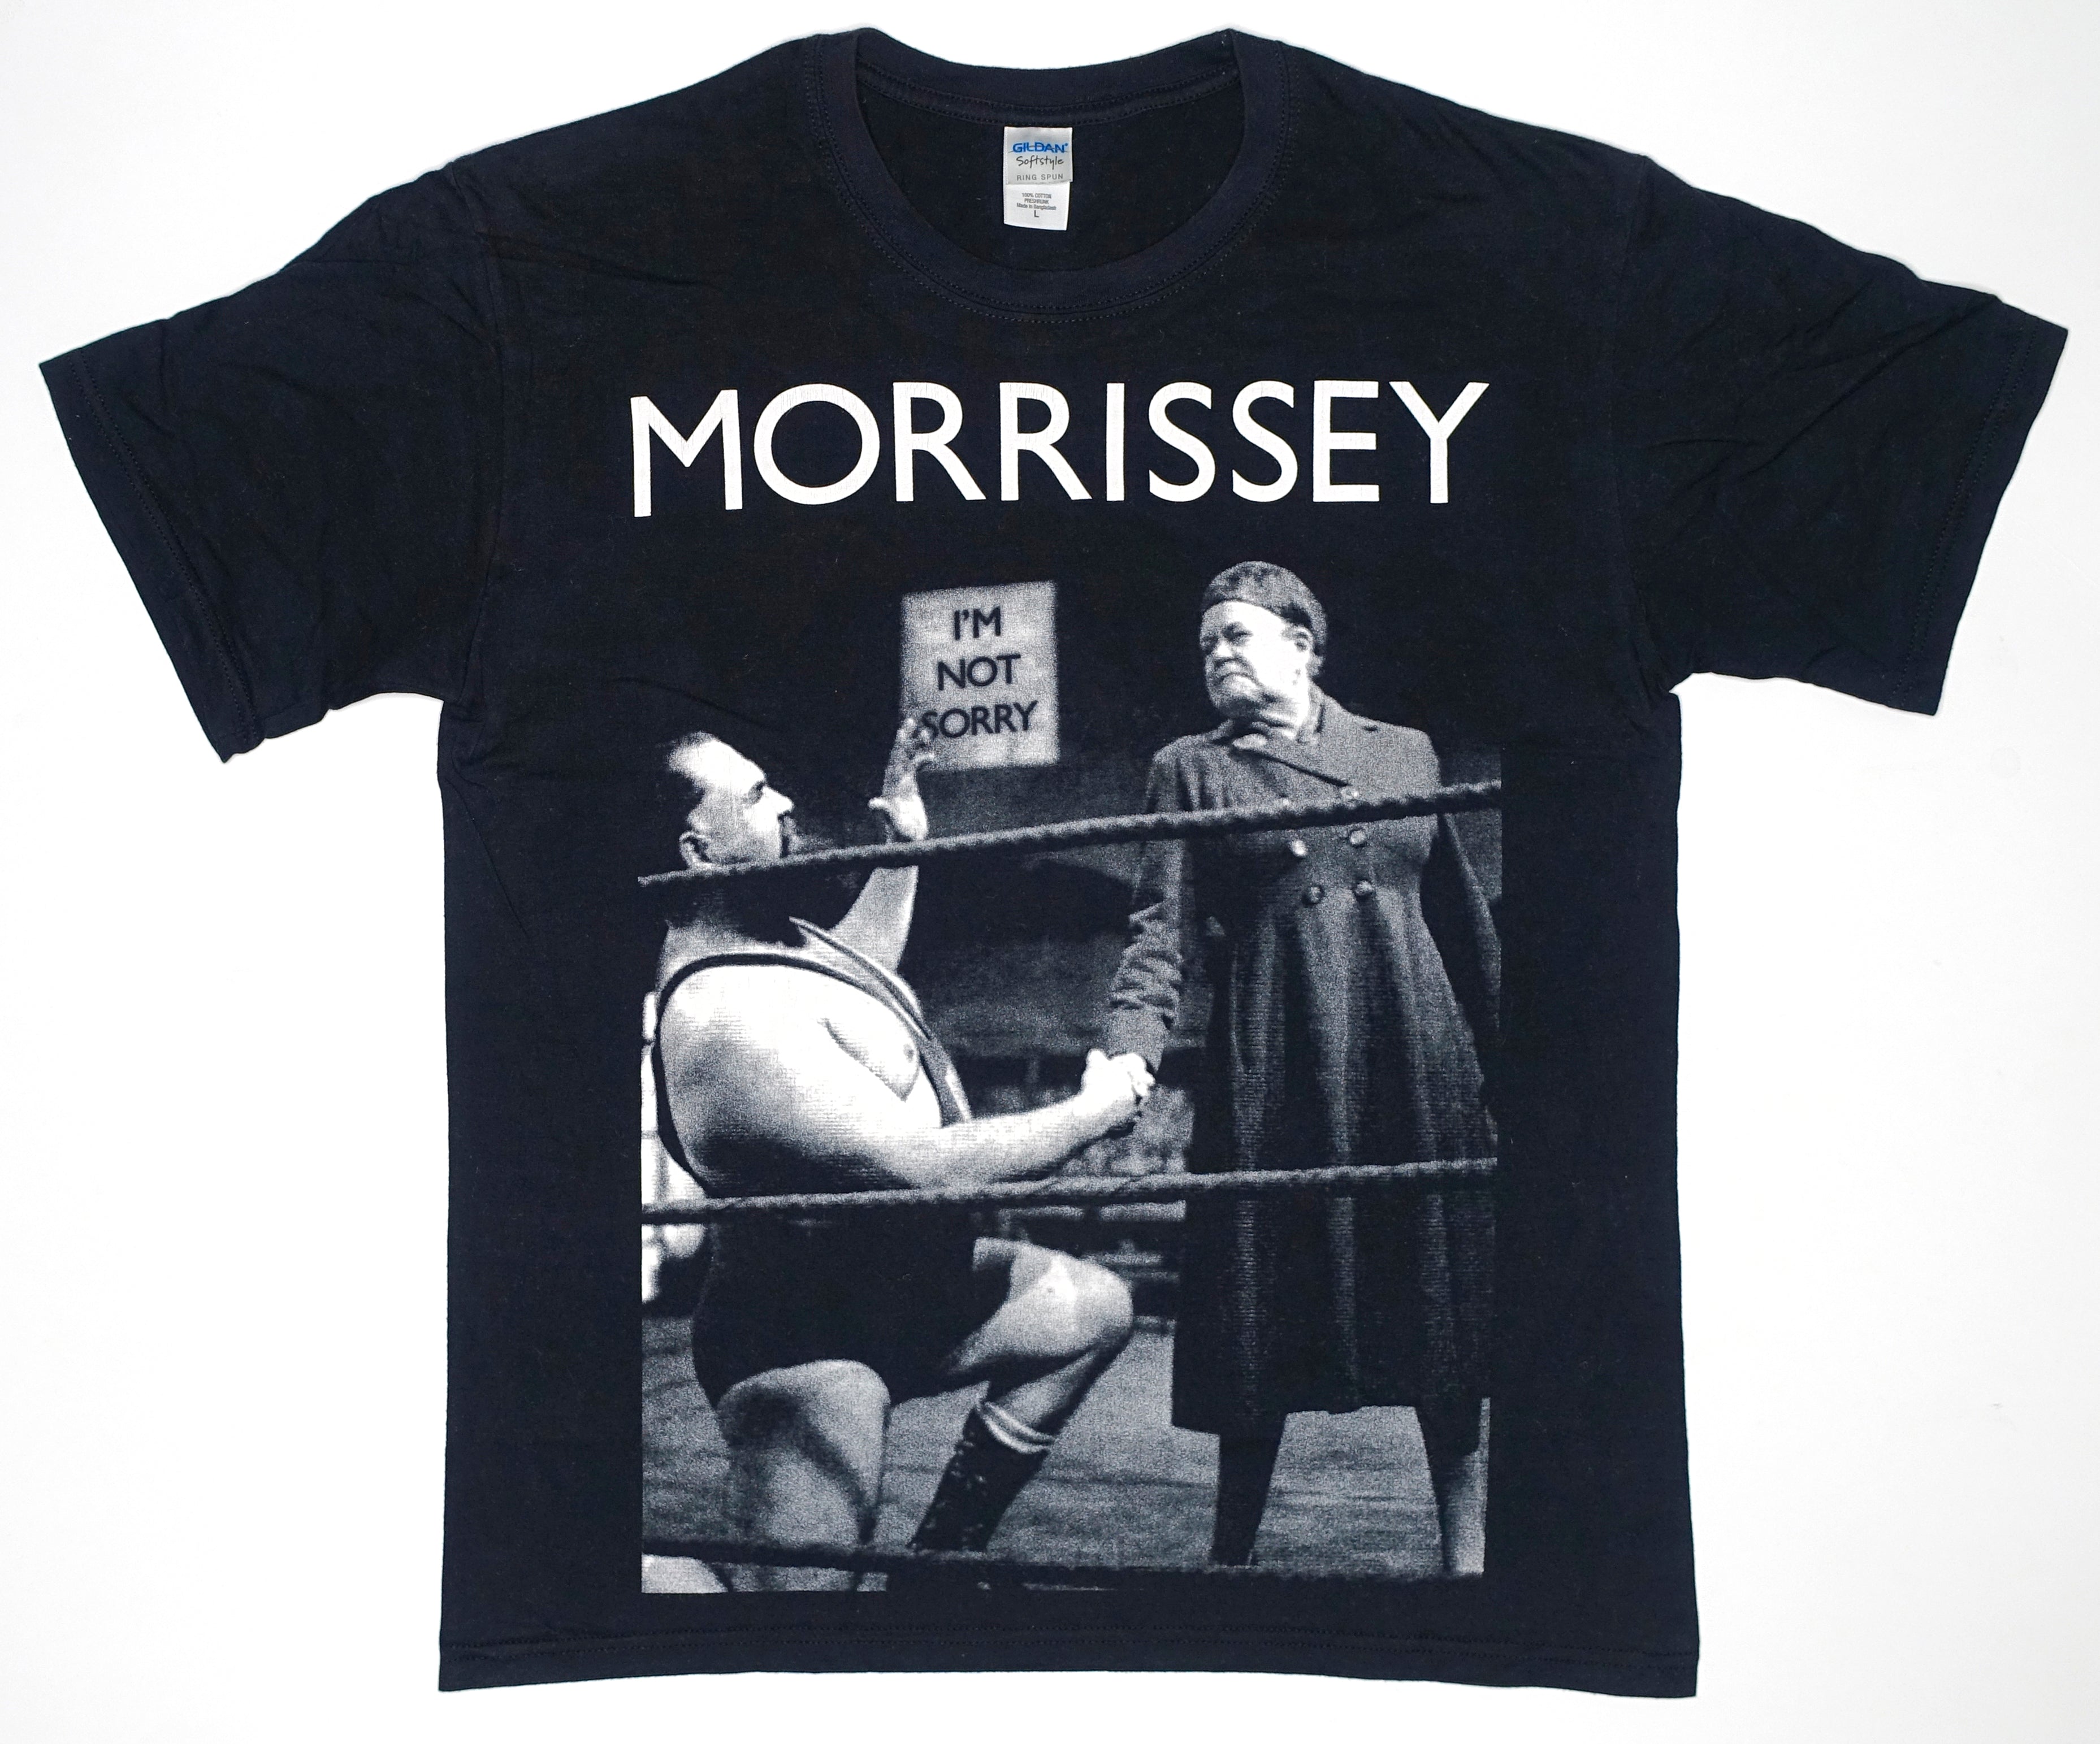 Morrissey - I'm Not Sorry Wrestler Tour Shirt Size Large